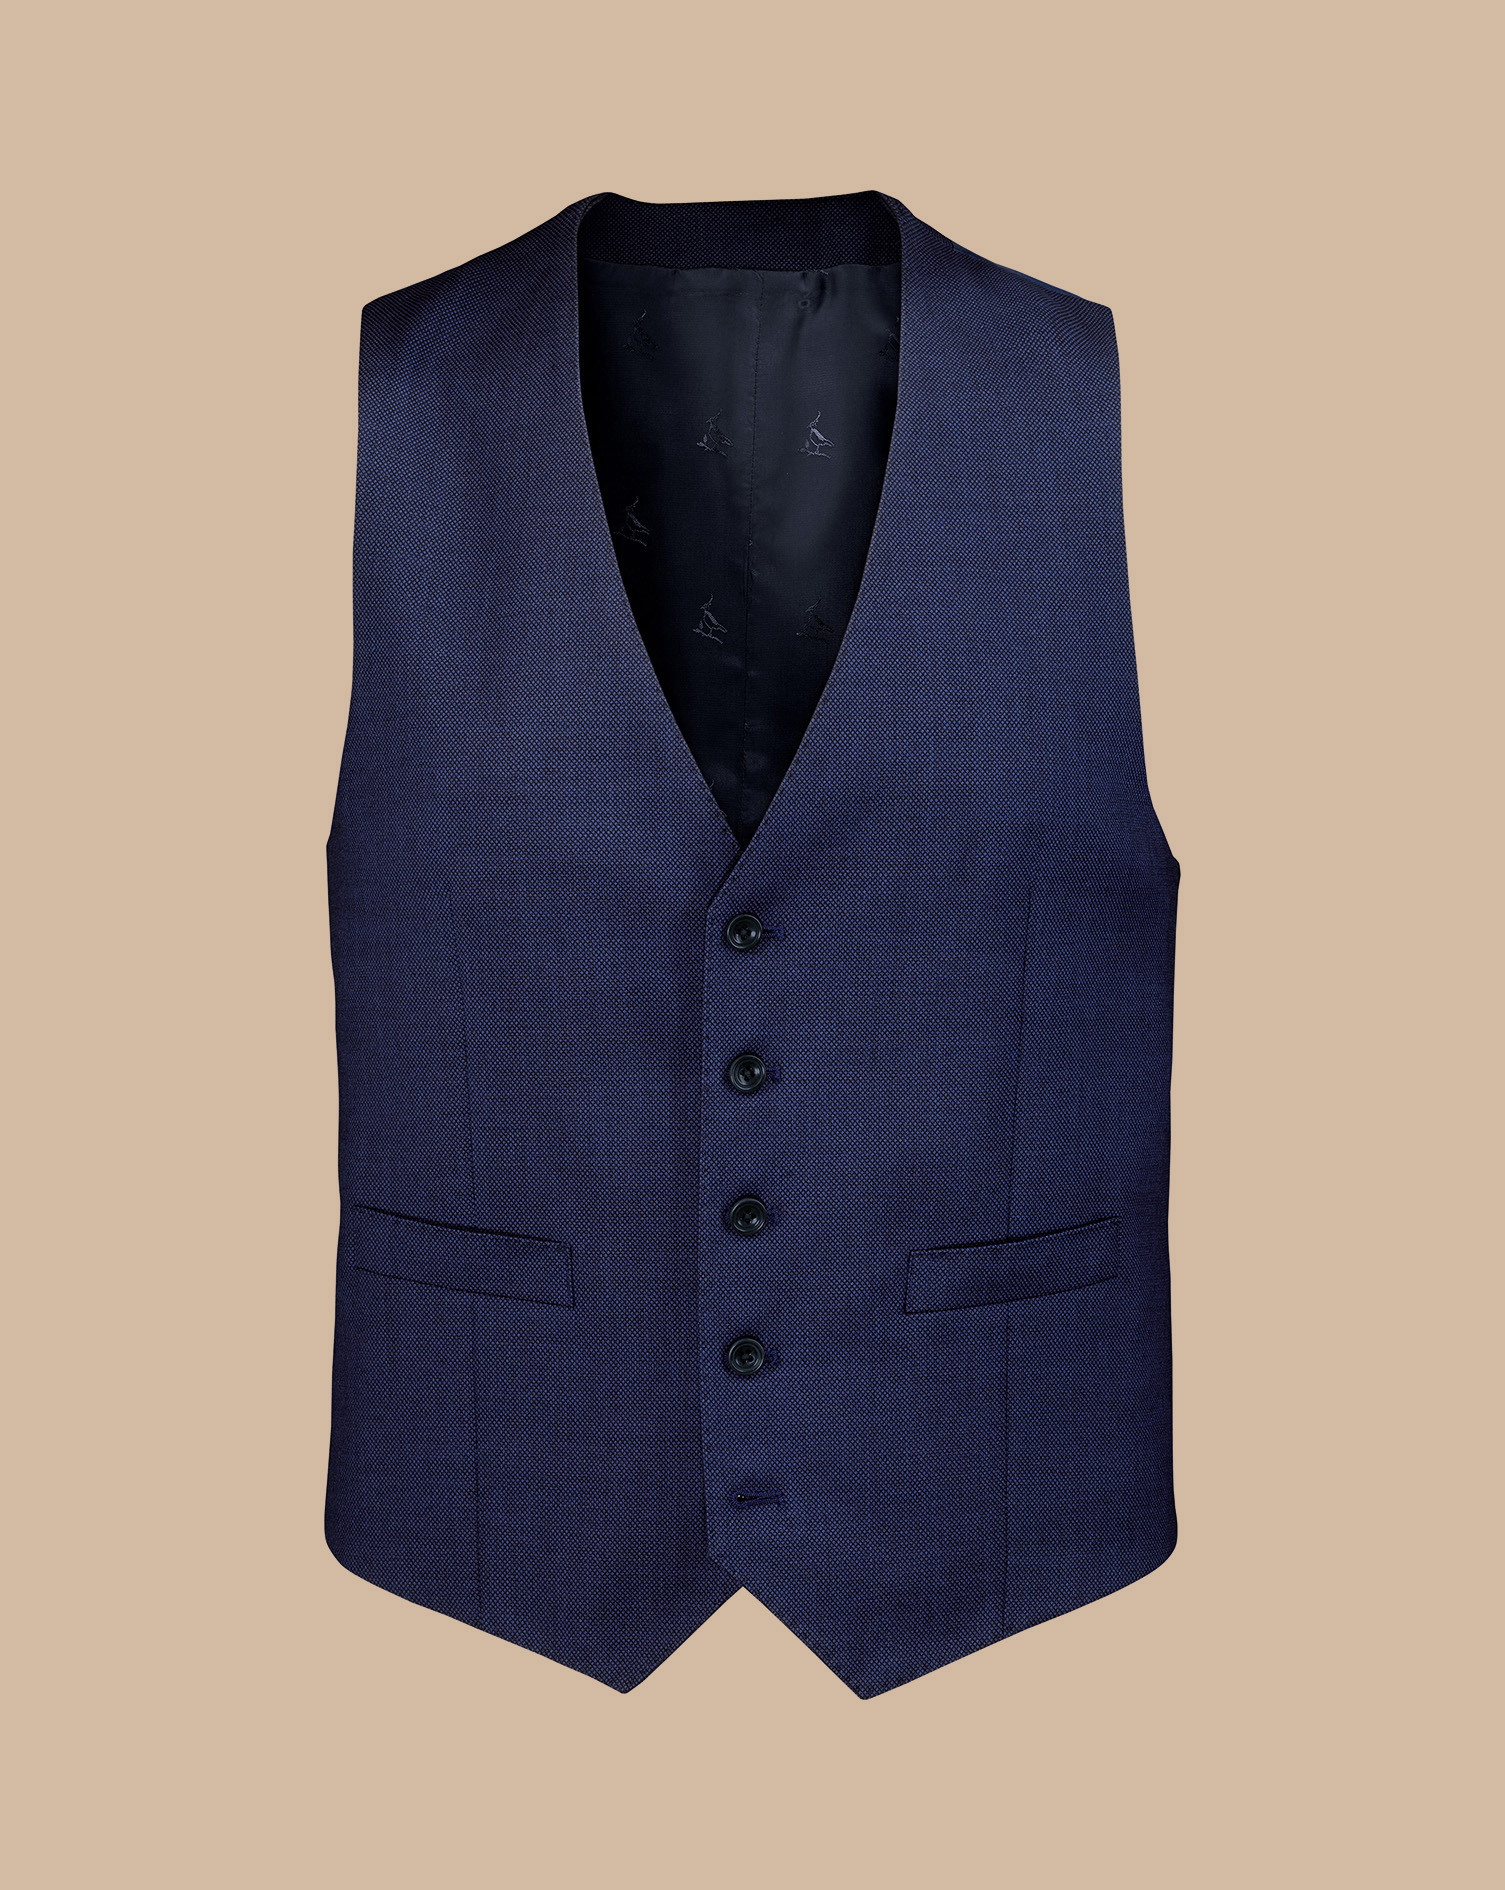 Men's Charles Tyrwhitt Ultimate Performance Birdseye Suit Waistcoat - Indigo Blue Size w40 Wool
